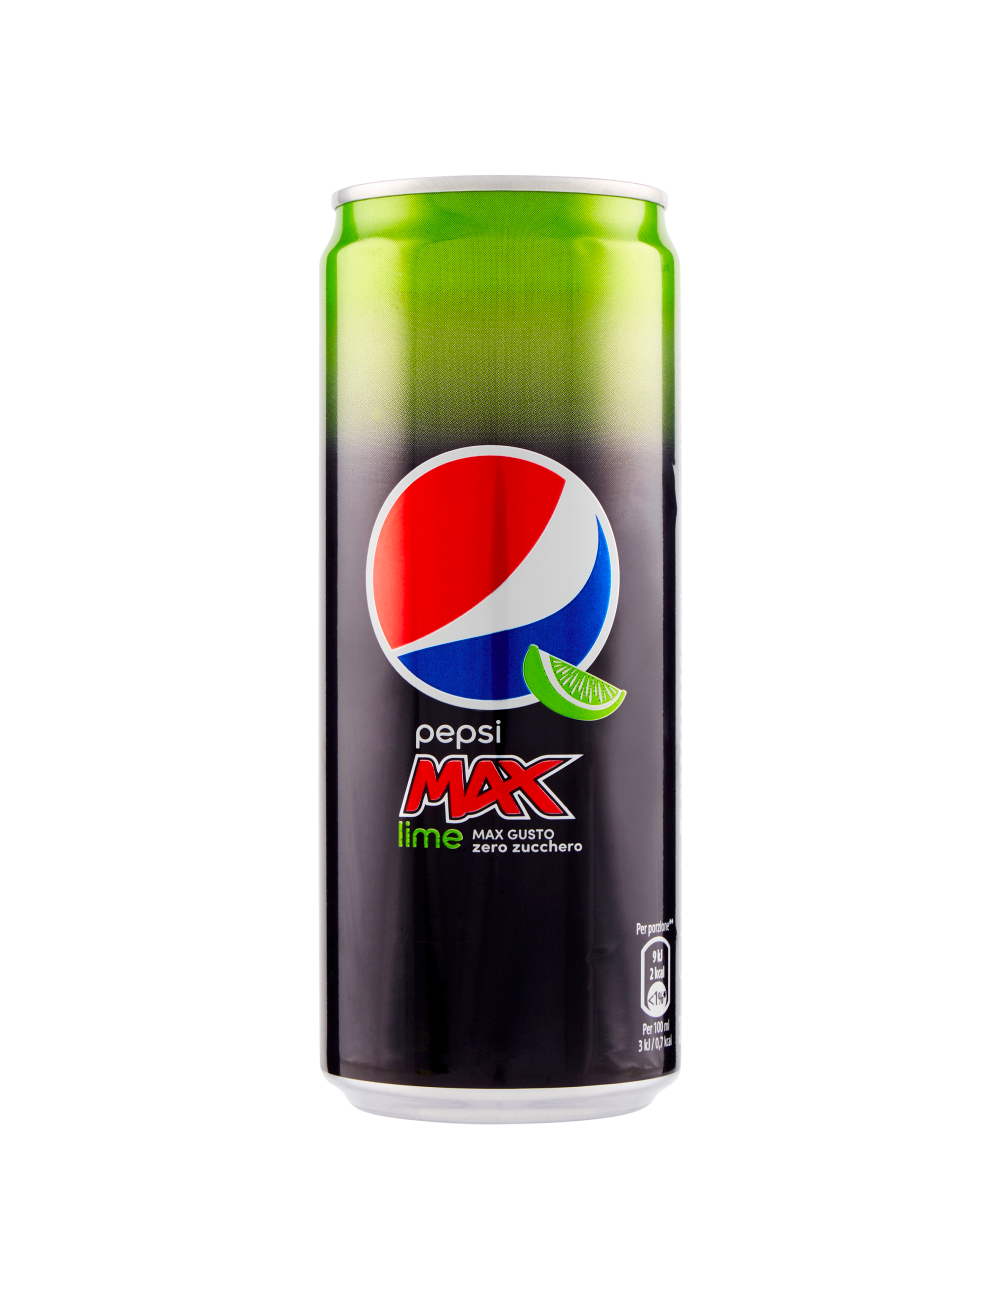 Pepsi Max Lime No Sugar Cola Cans